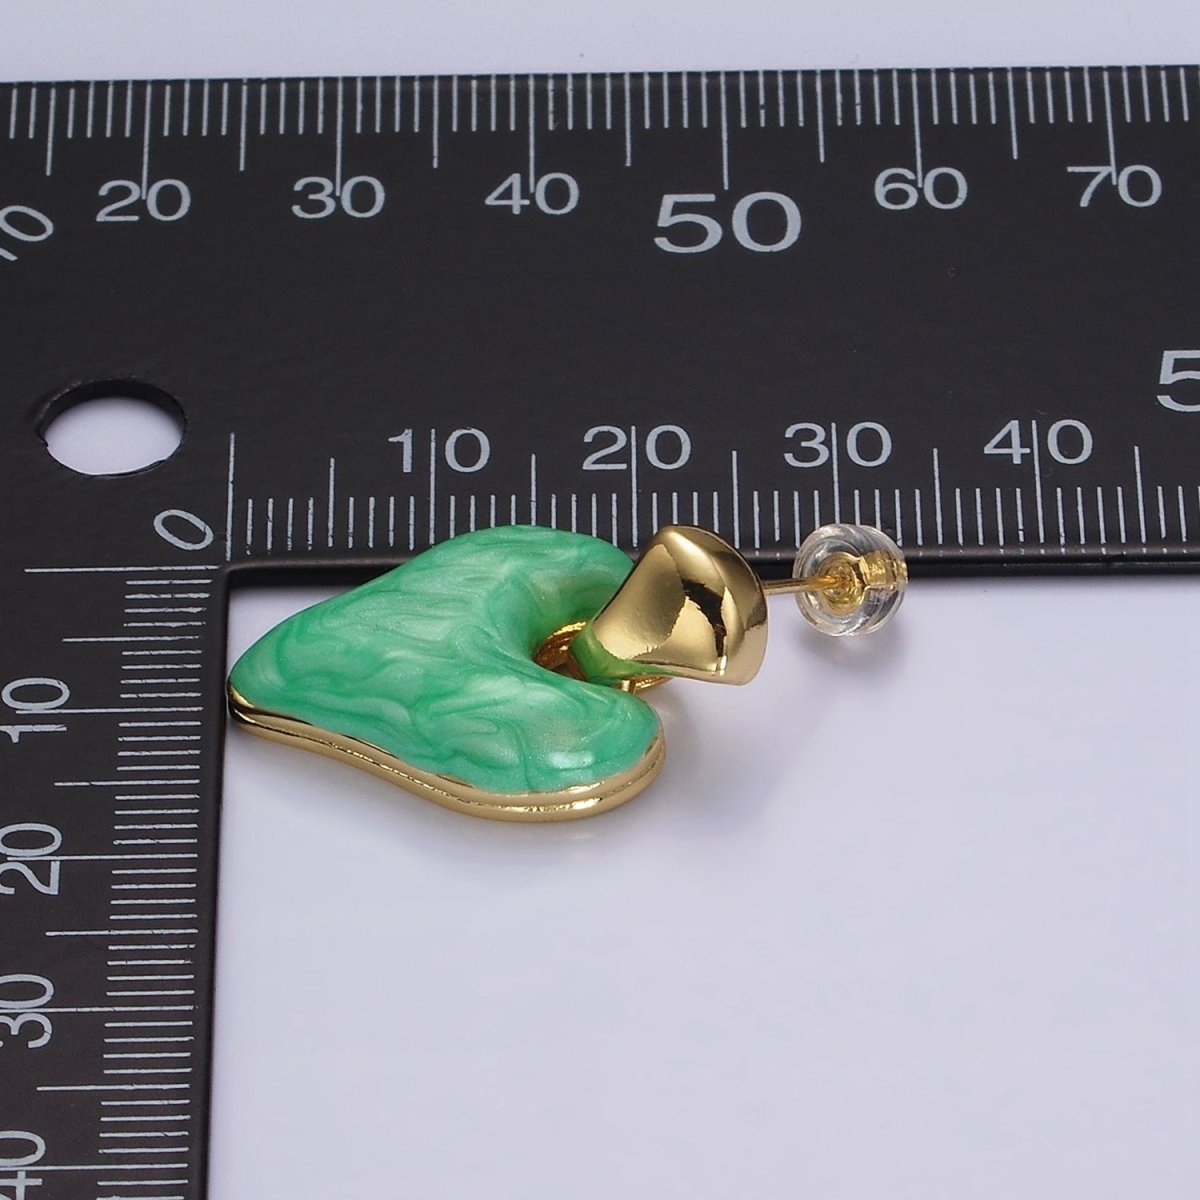 14K Gold Filled White, Pink, Purple, Blue, Green Enamel Heart Drop Stud Earrings | V-241 - V-245 - DLUXCA